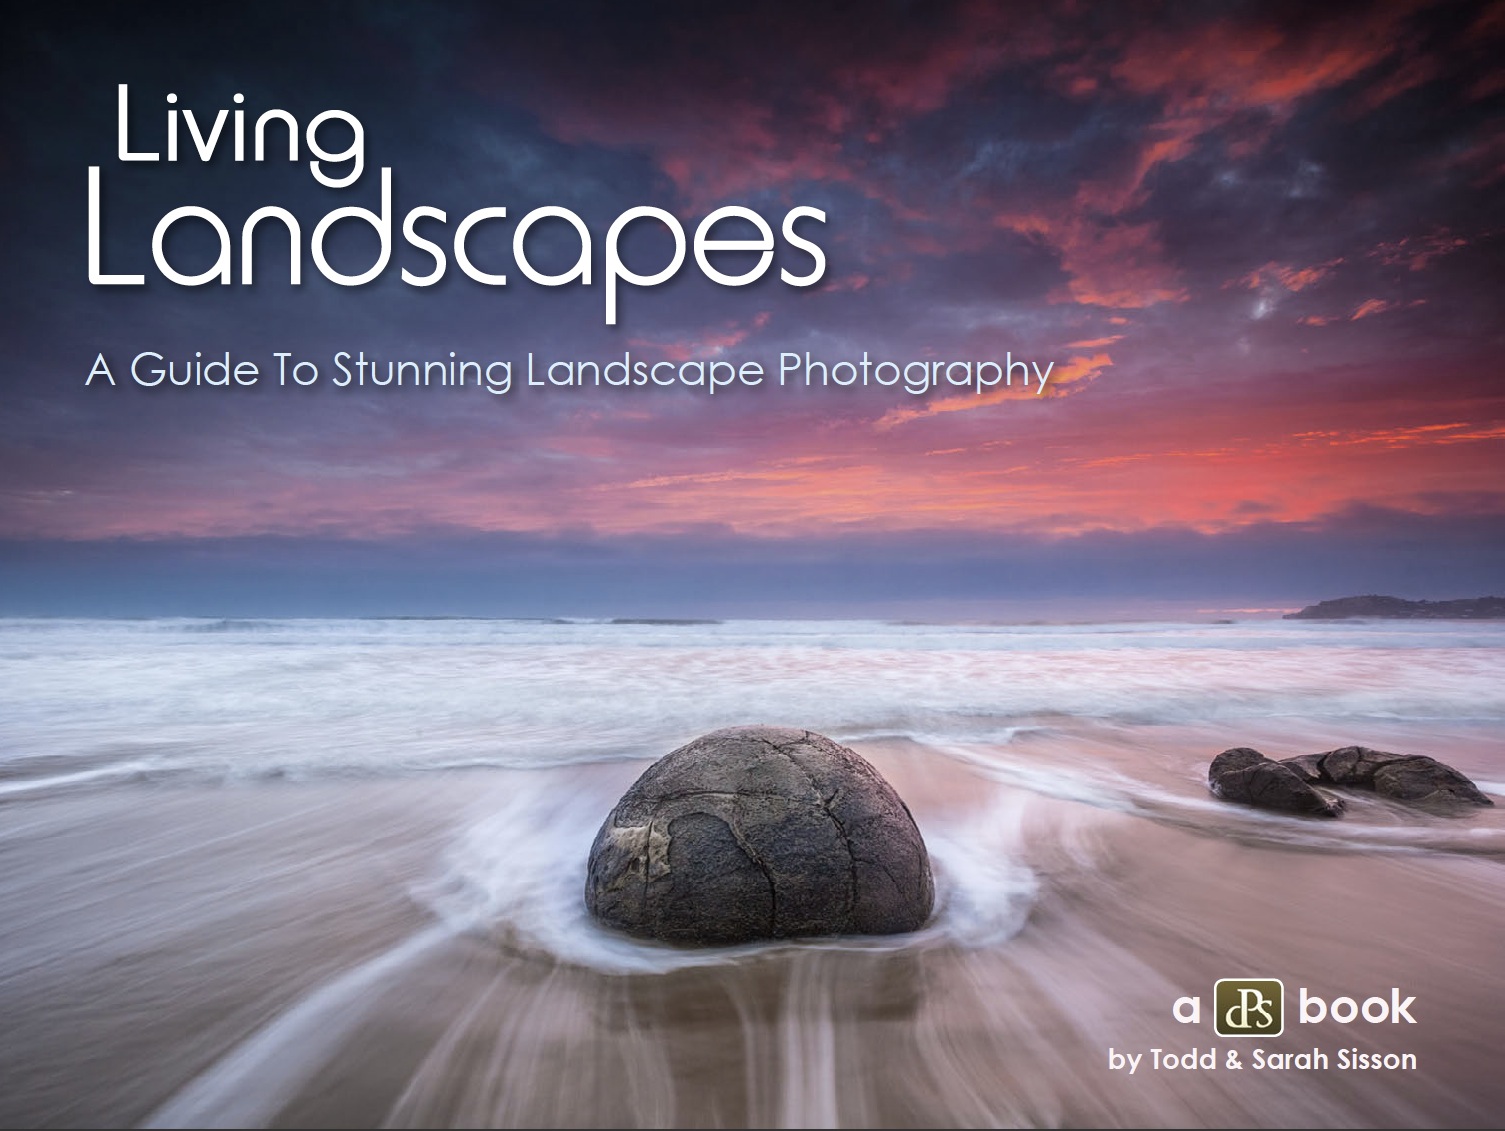 Stunning Digital Photography Landscape